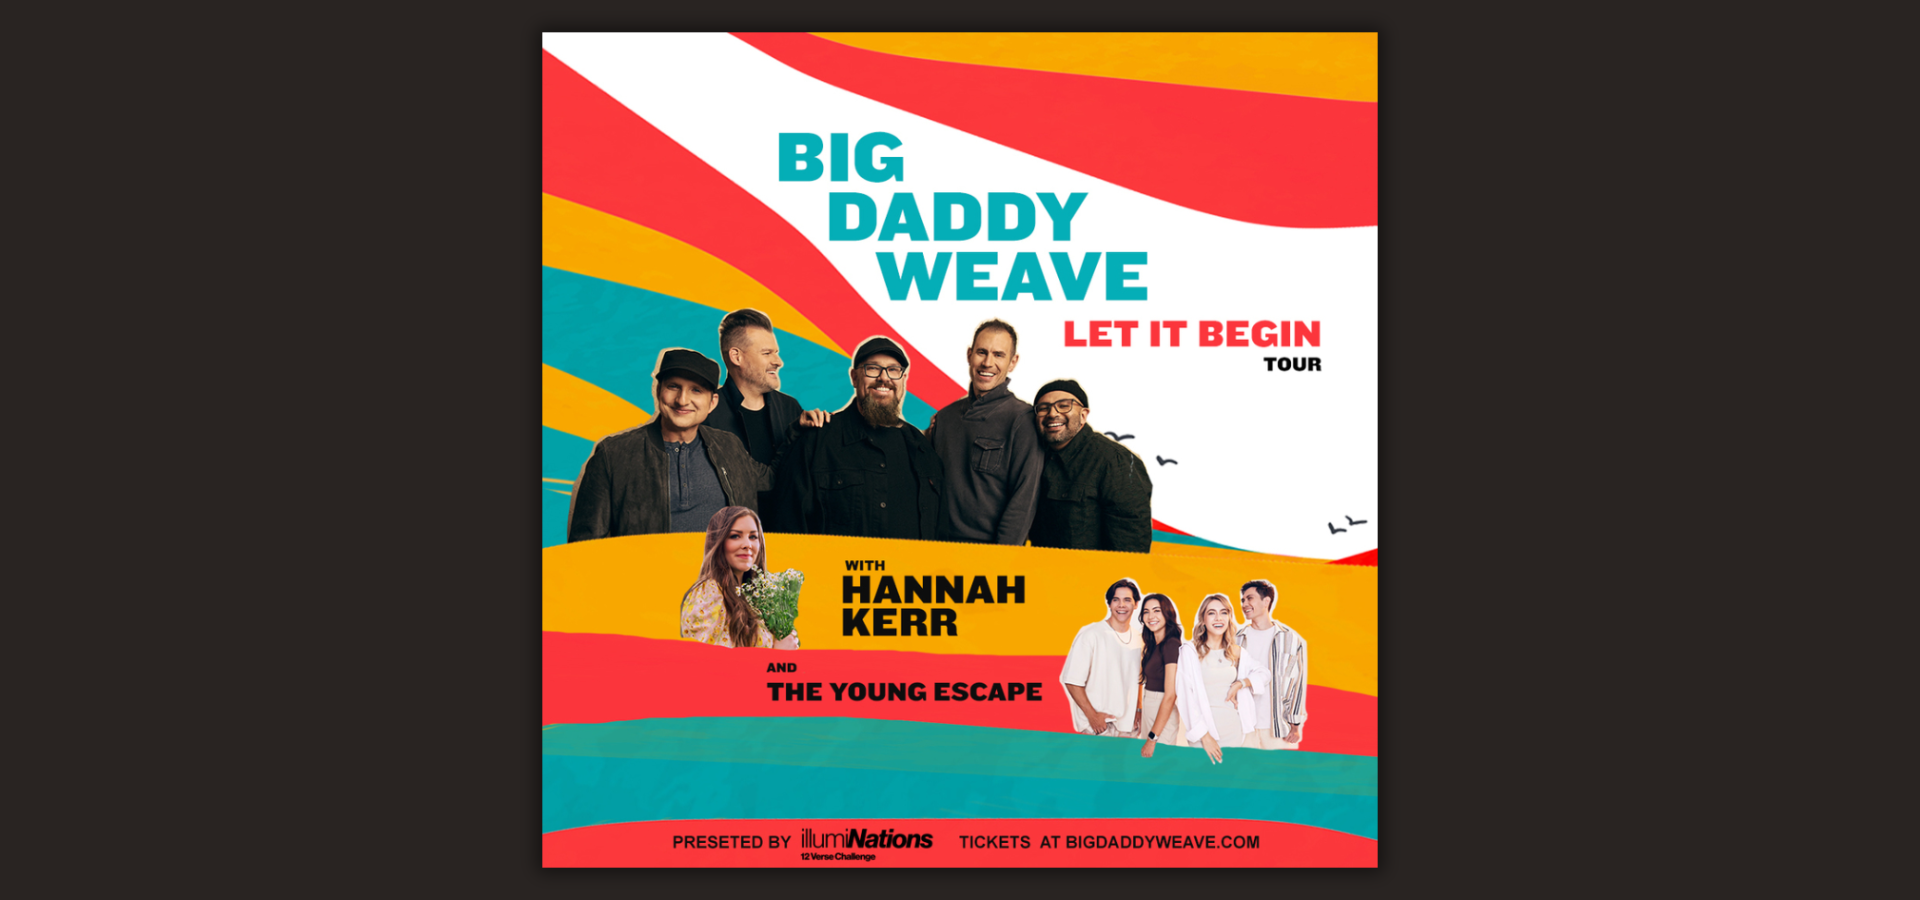 Big Daddy Weave Announces The Let It Begin Tour